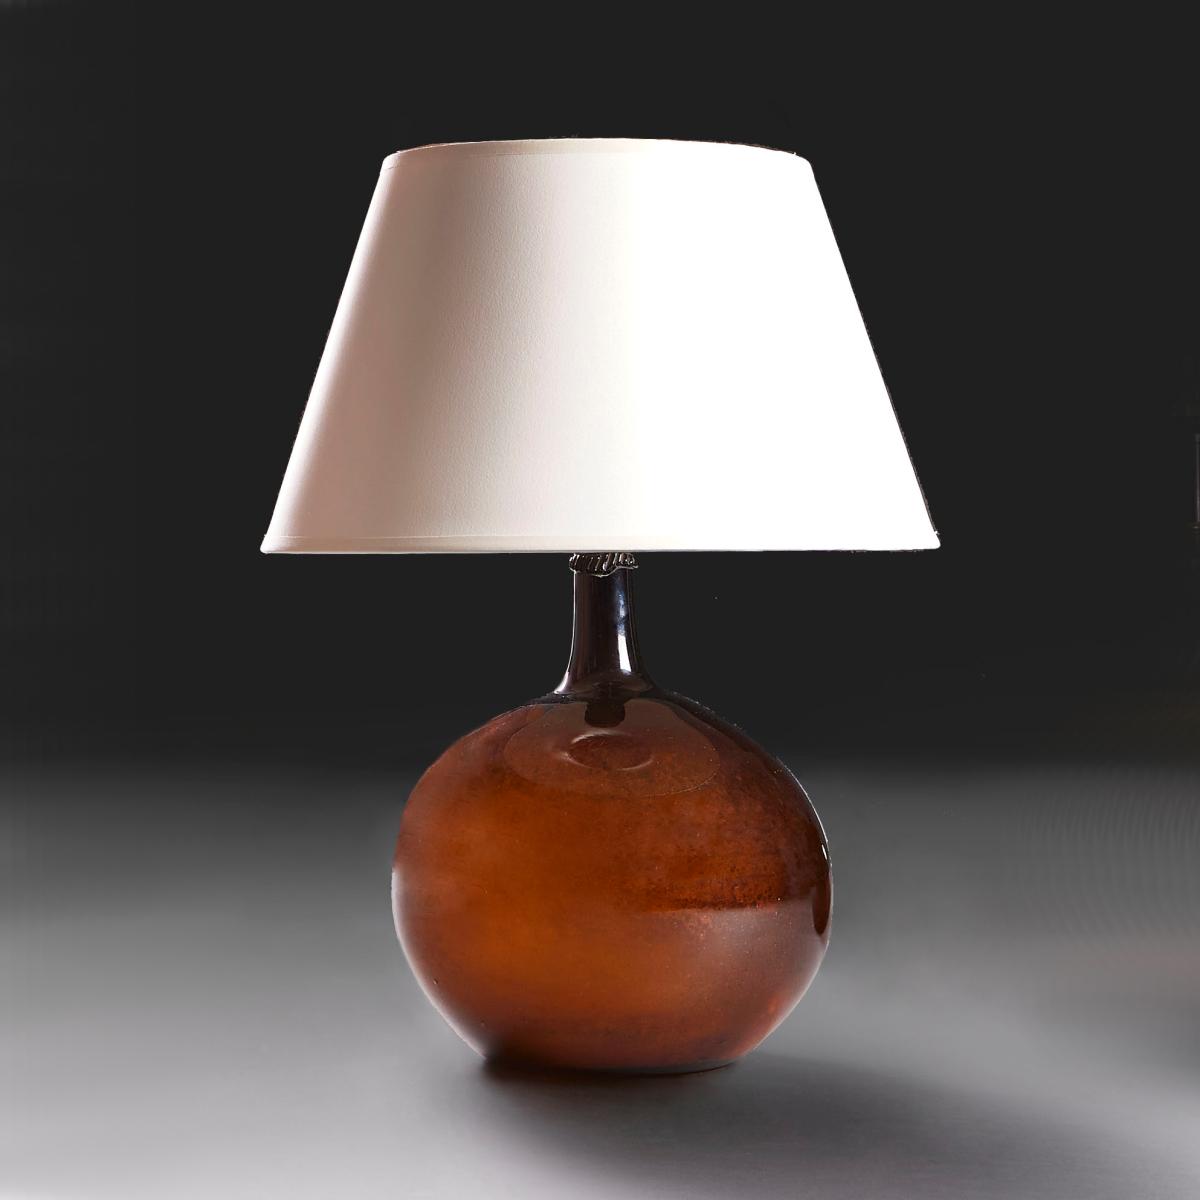 A single amber glass vessel as a lamp